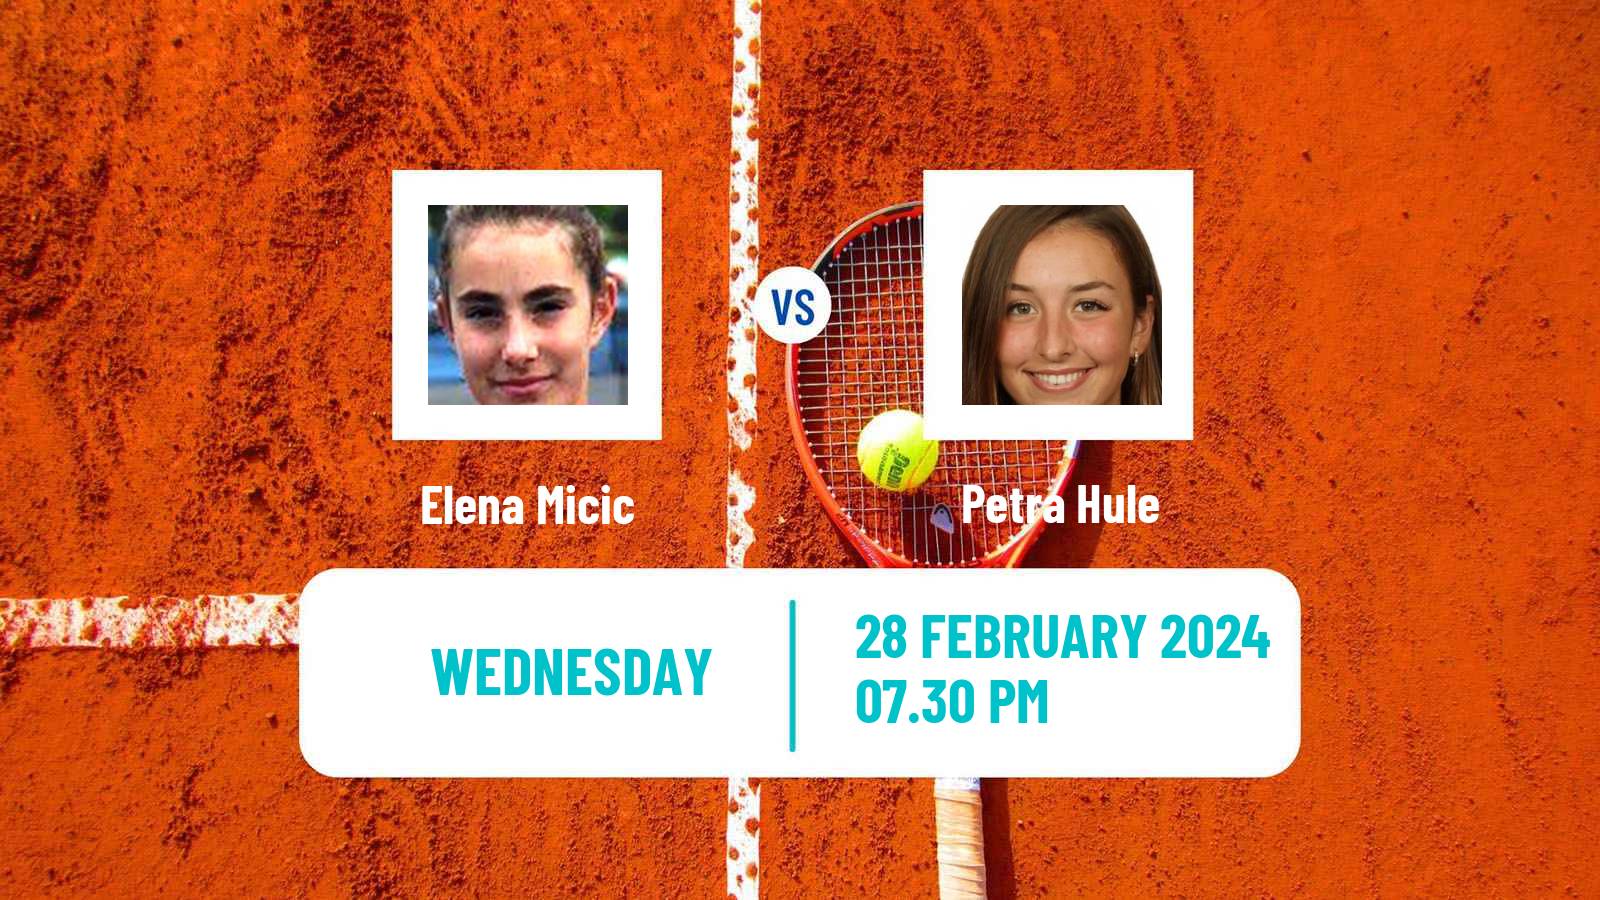 Tennis ITF W35 Traralgon 2 Women Elena Micic - Petra Hule